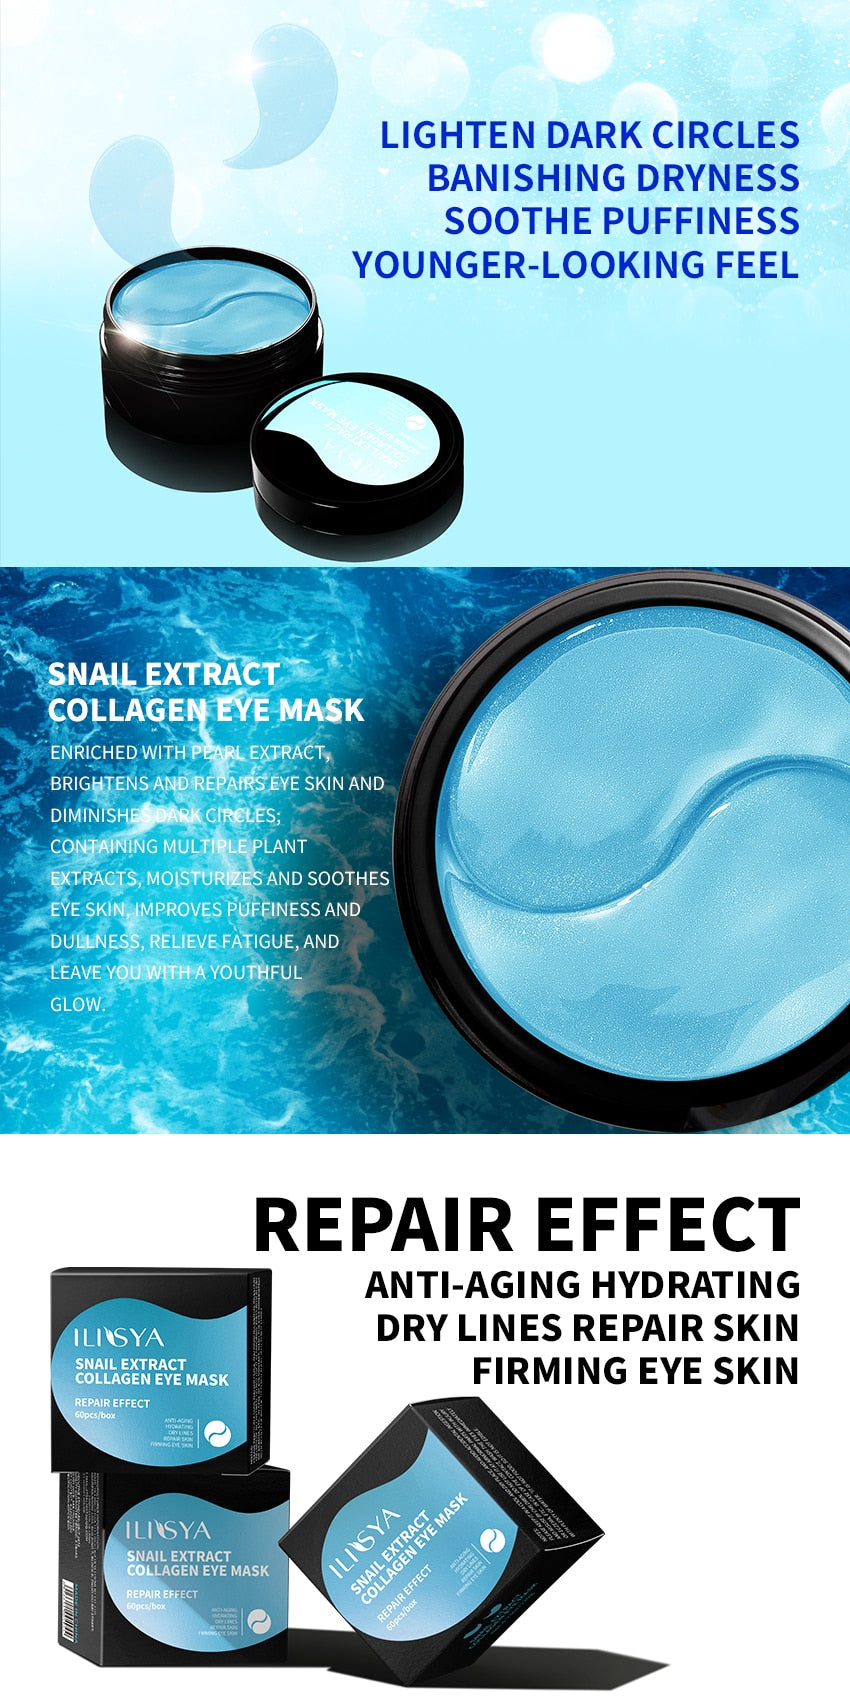 Collagen Series Eye Mask Seaweed Snail Original Liquid Black Pearl Series Gel Remove Dark Circles Anti-puffiness Anti-aging Mask